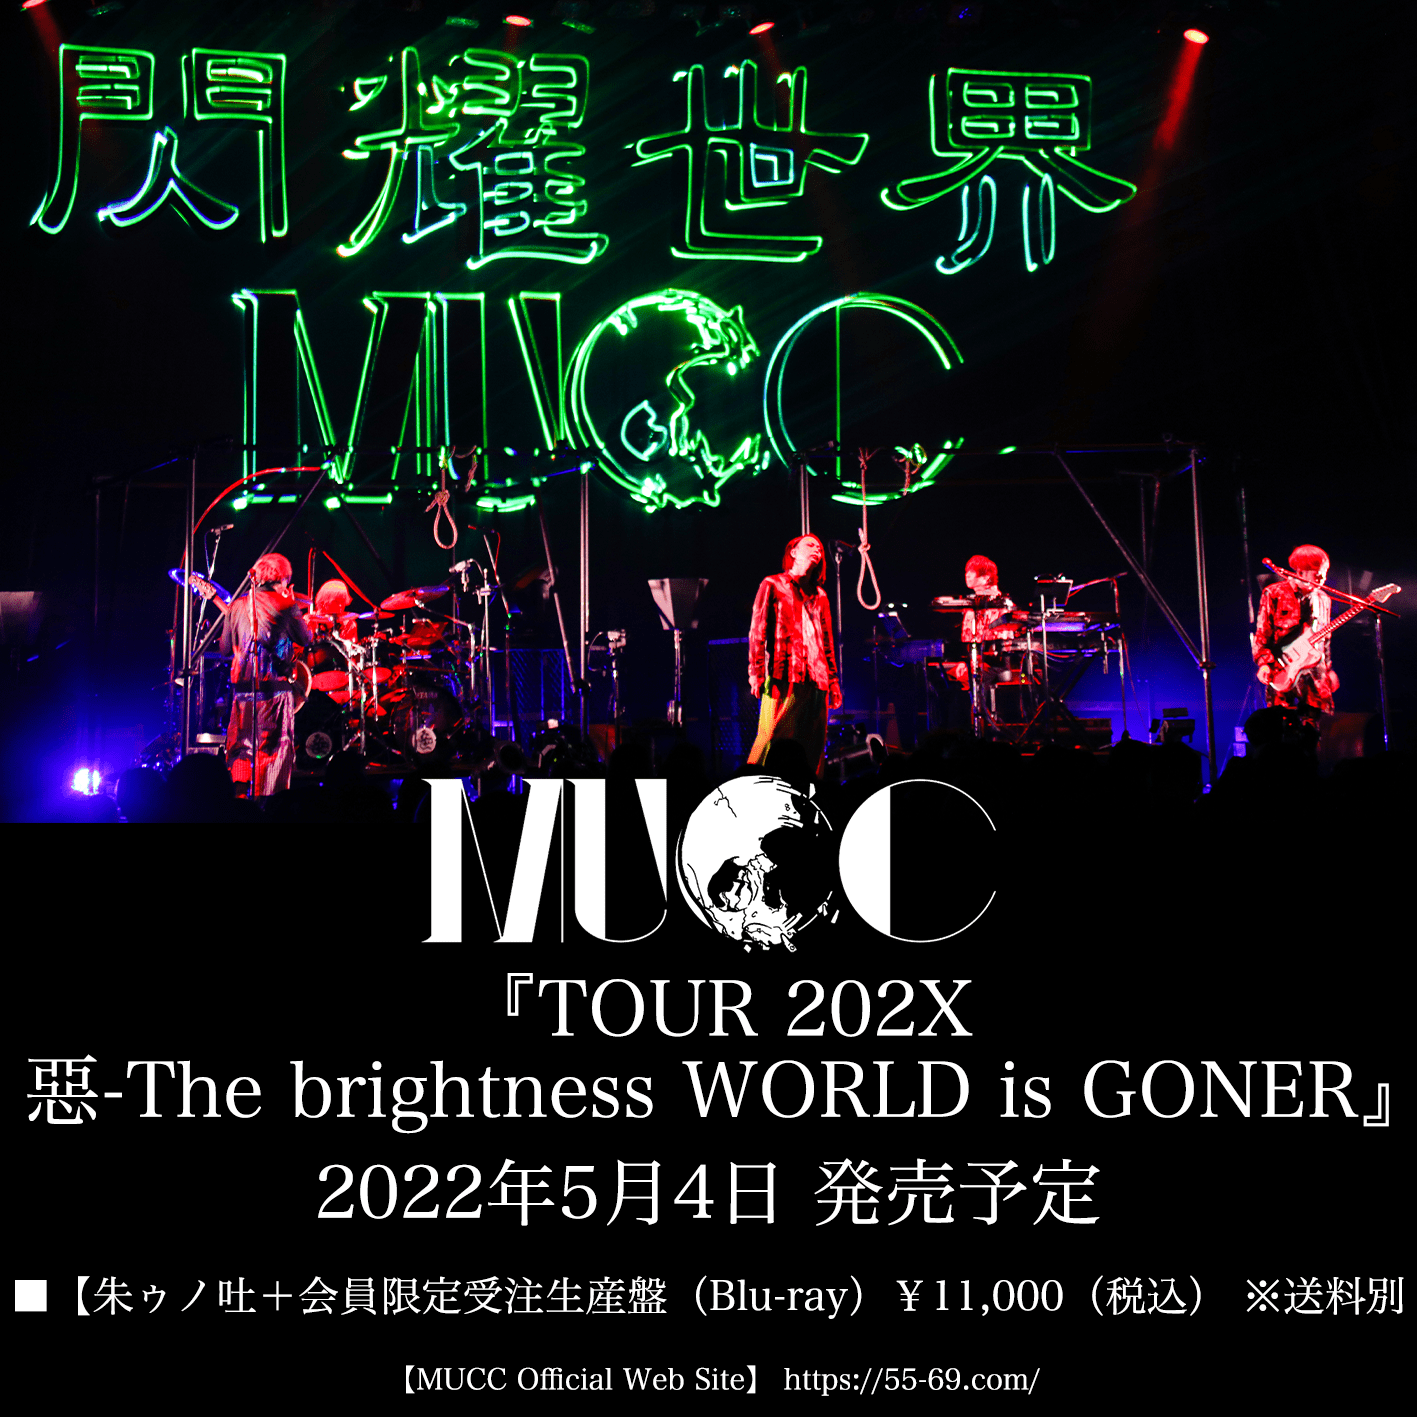 MUCC/TOUR 202X 惡-The brightness WORLD is